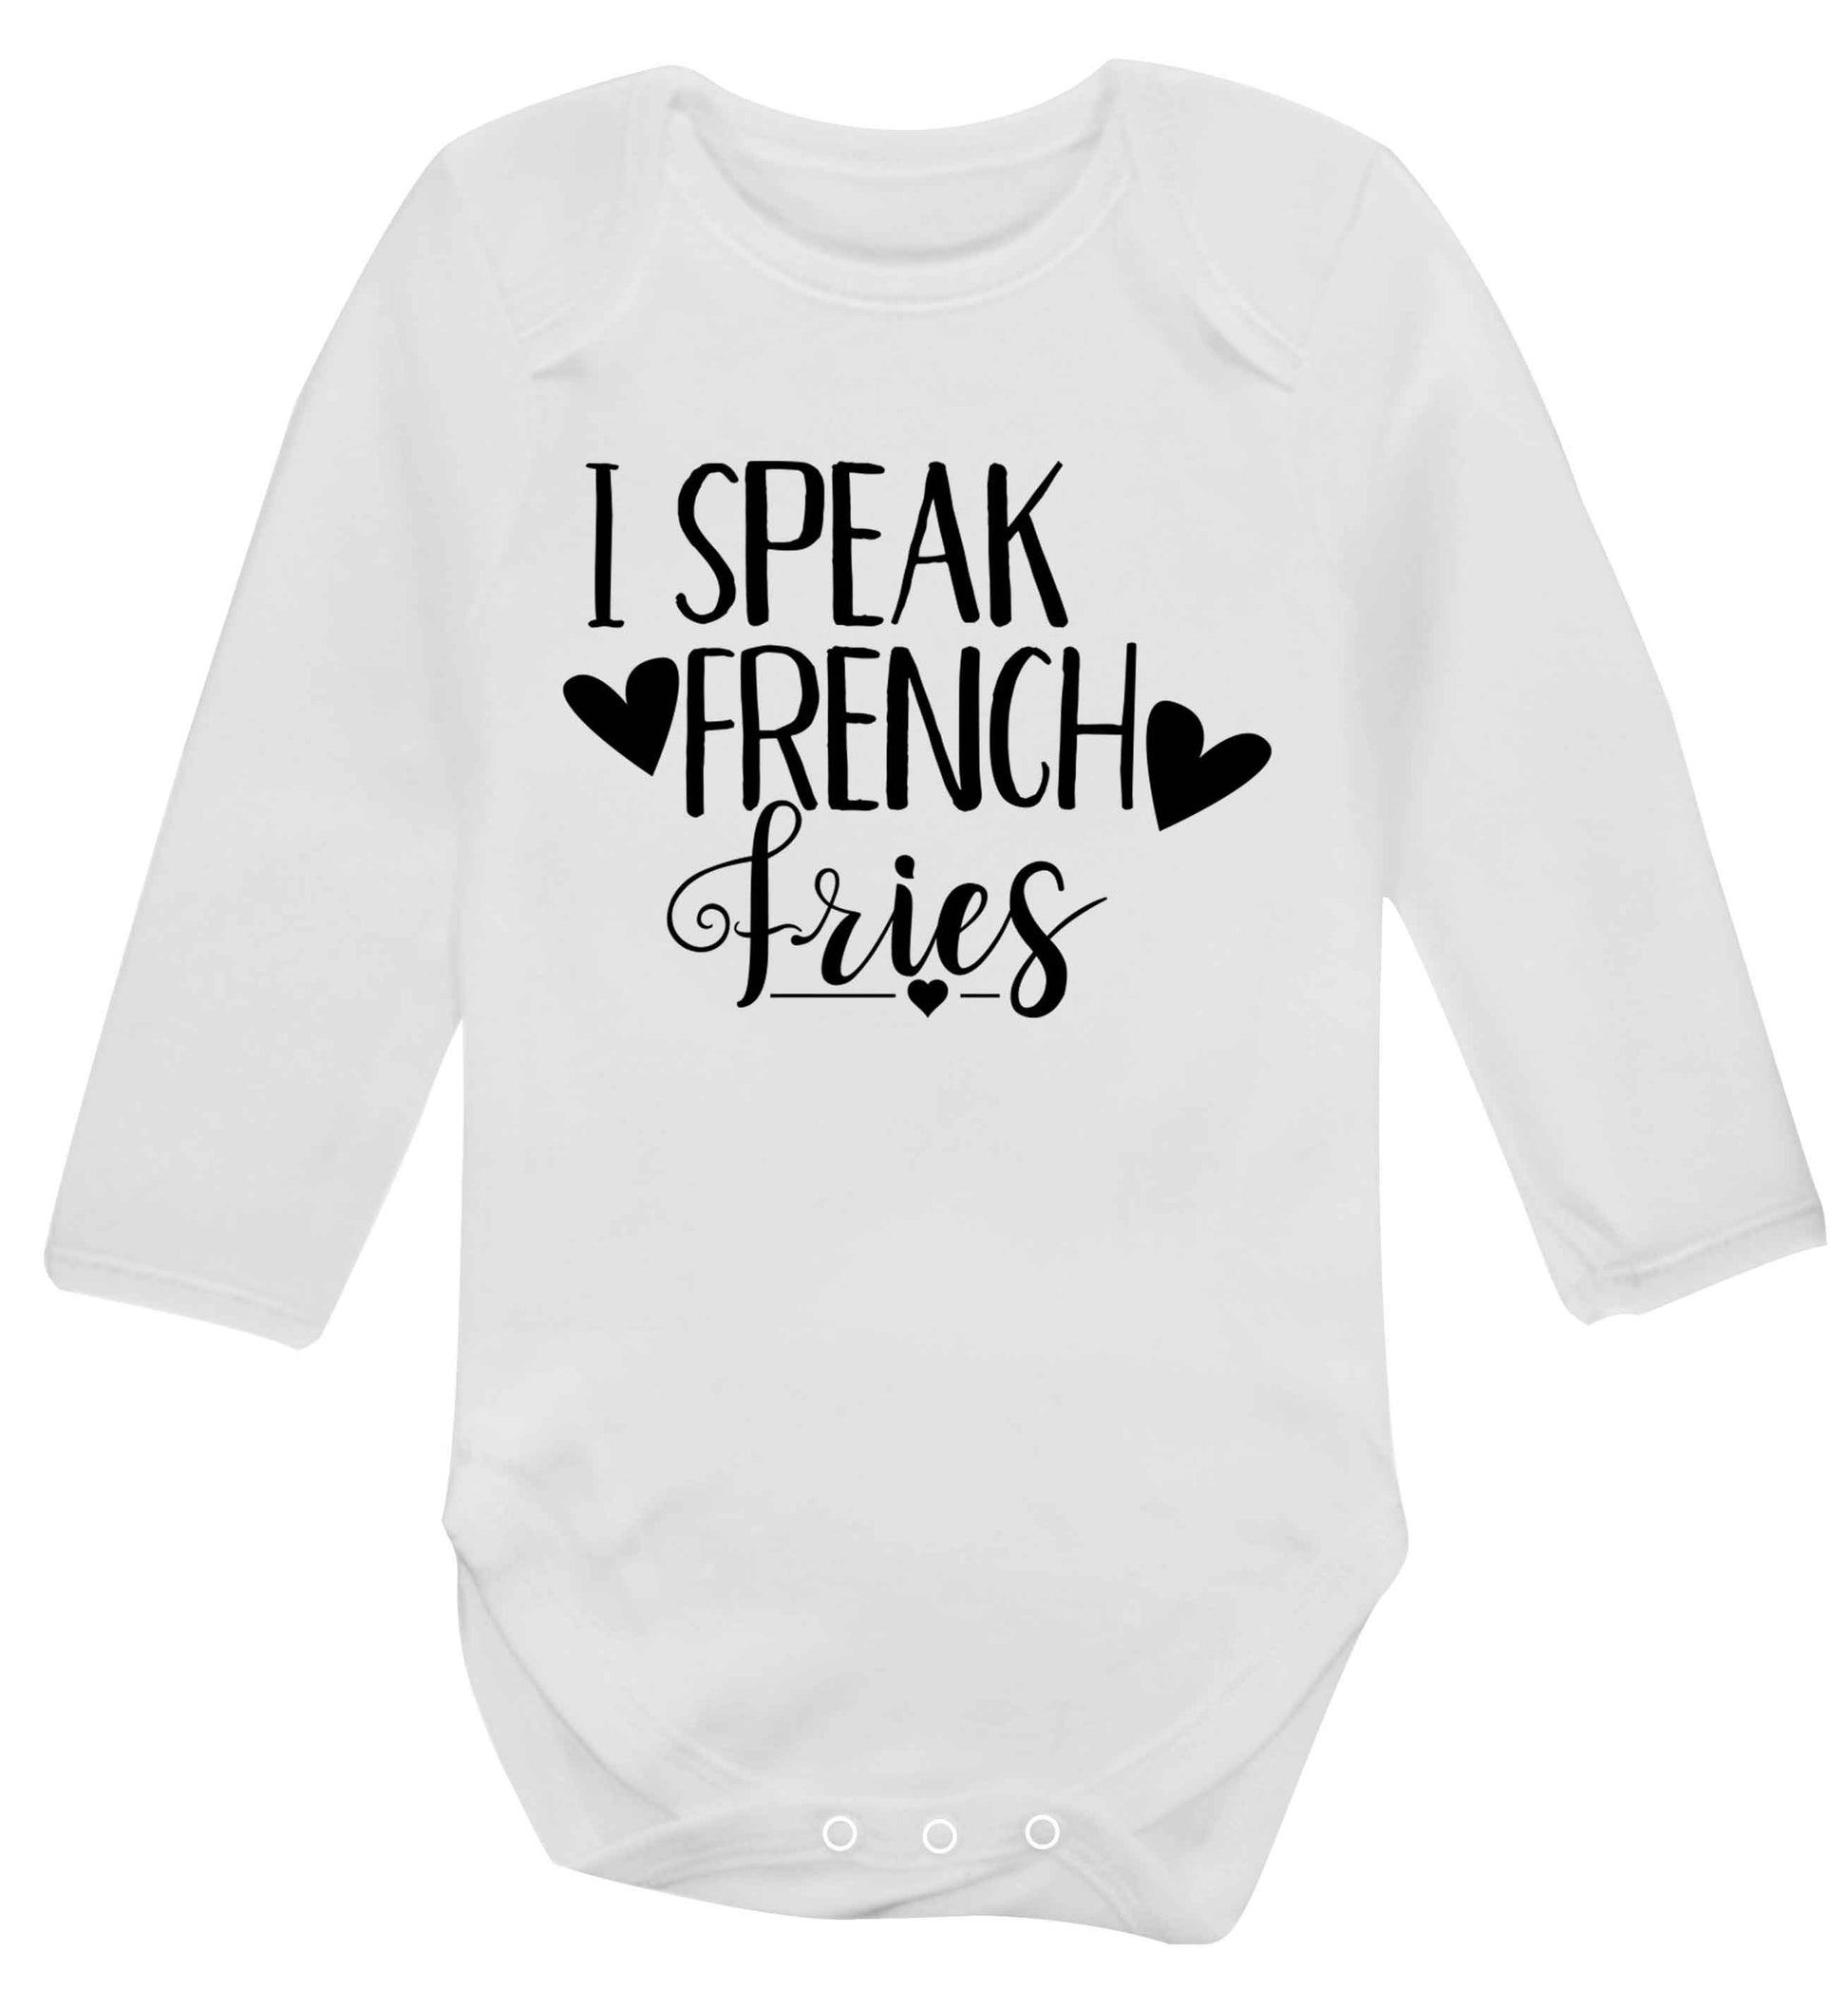 I speak French fries Baby Vest long sleeved white 6-12 months